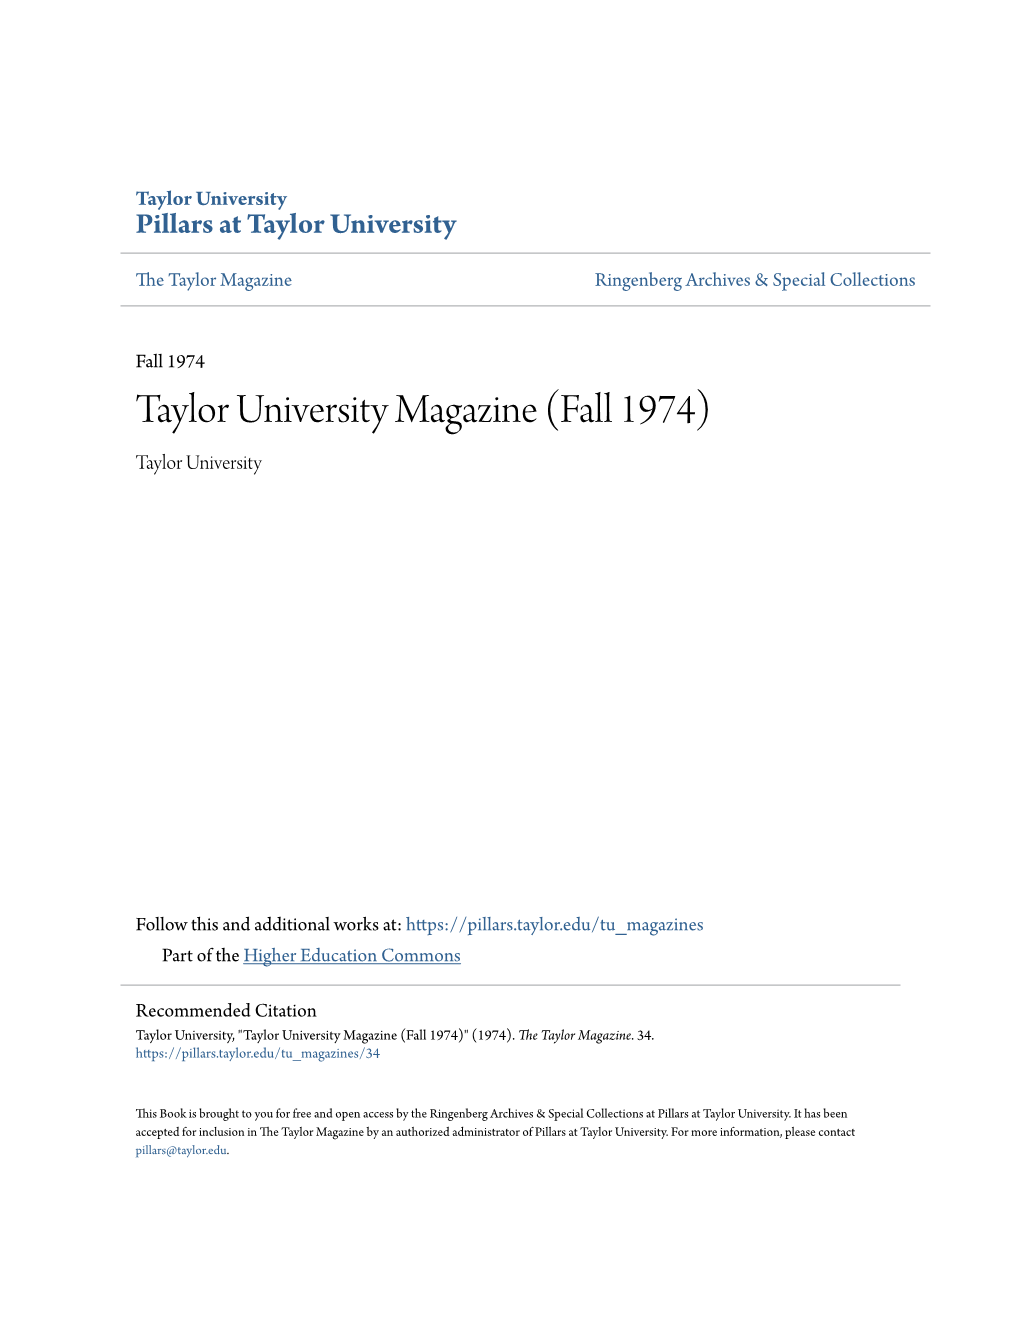 Taylor University Magazine (Fall 1974) Taylor University